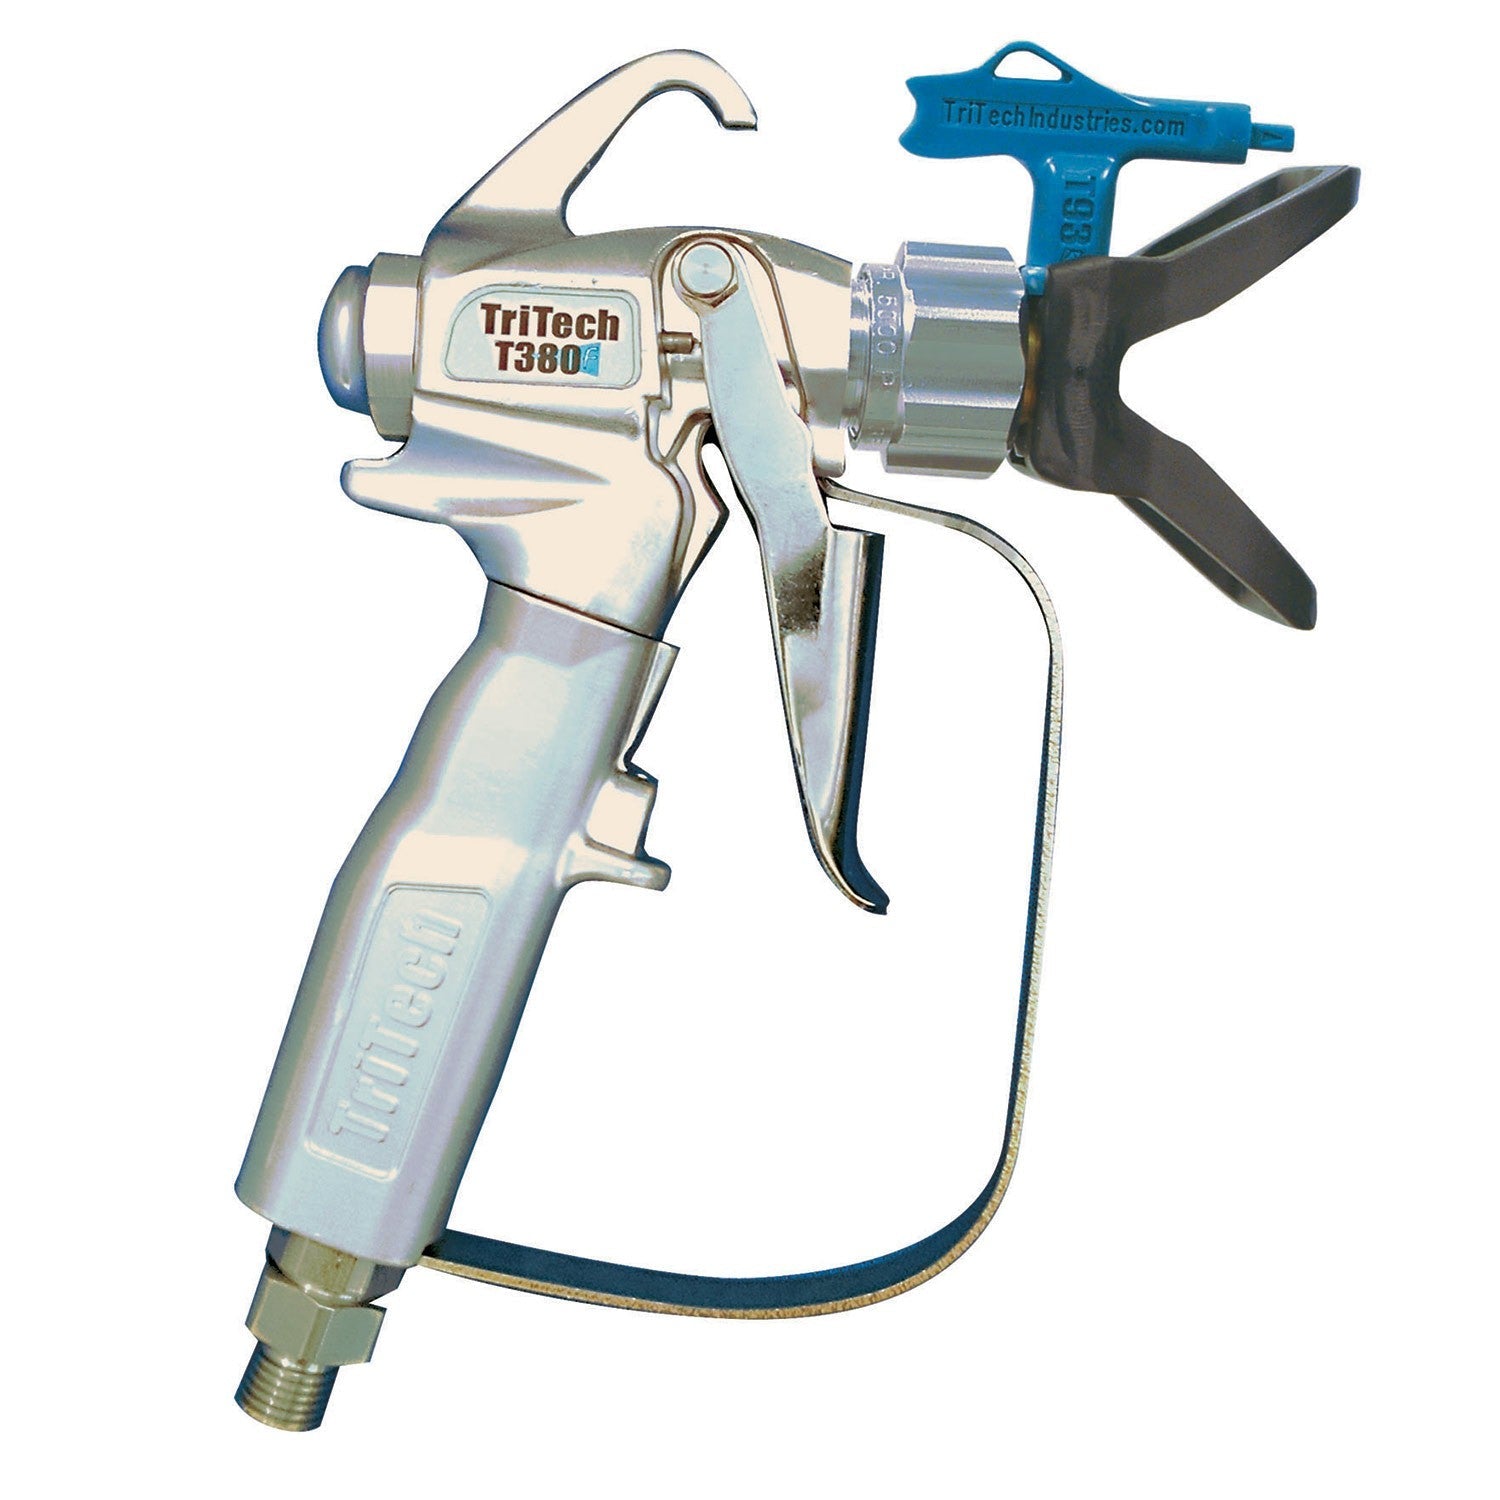 TriTech Airless Hose for Airless Paint Sprayers, 400-114